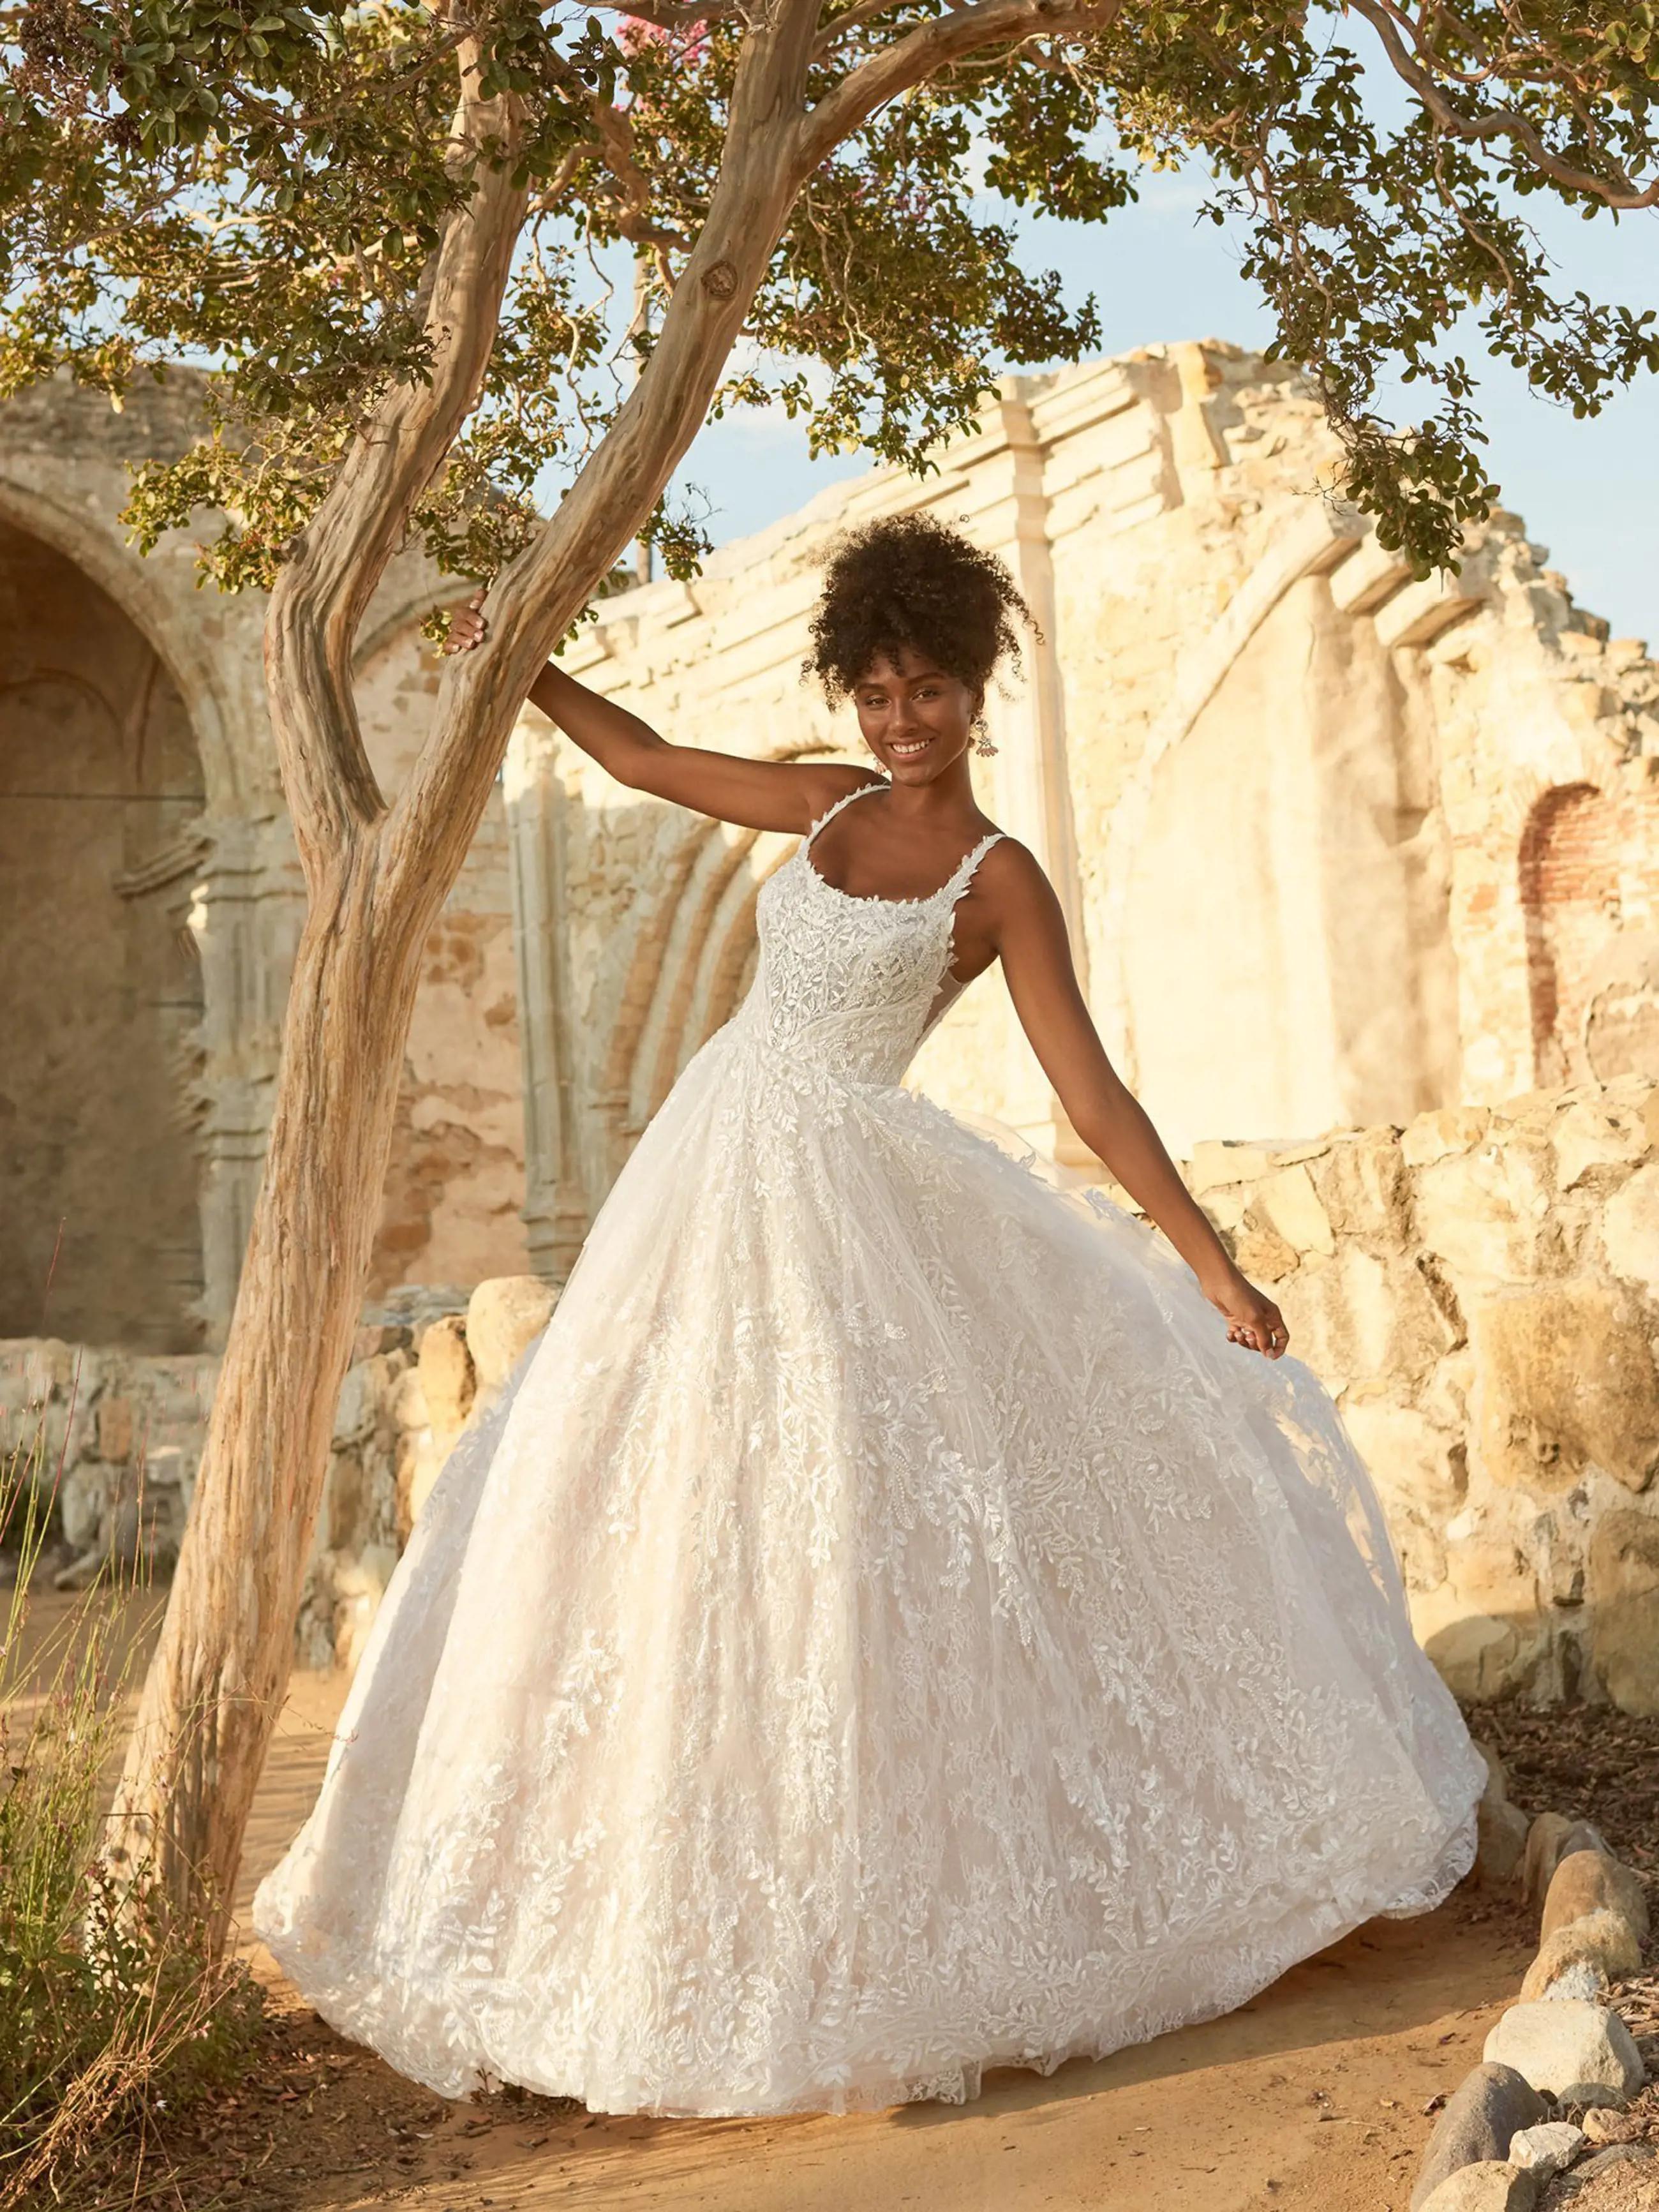 Wedding Dresses That Will Make You Feel Like a Princess Image